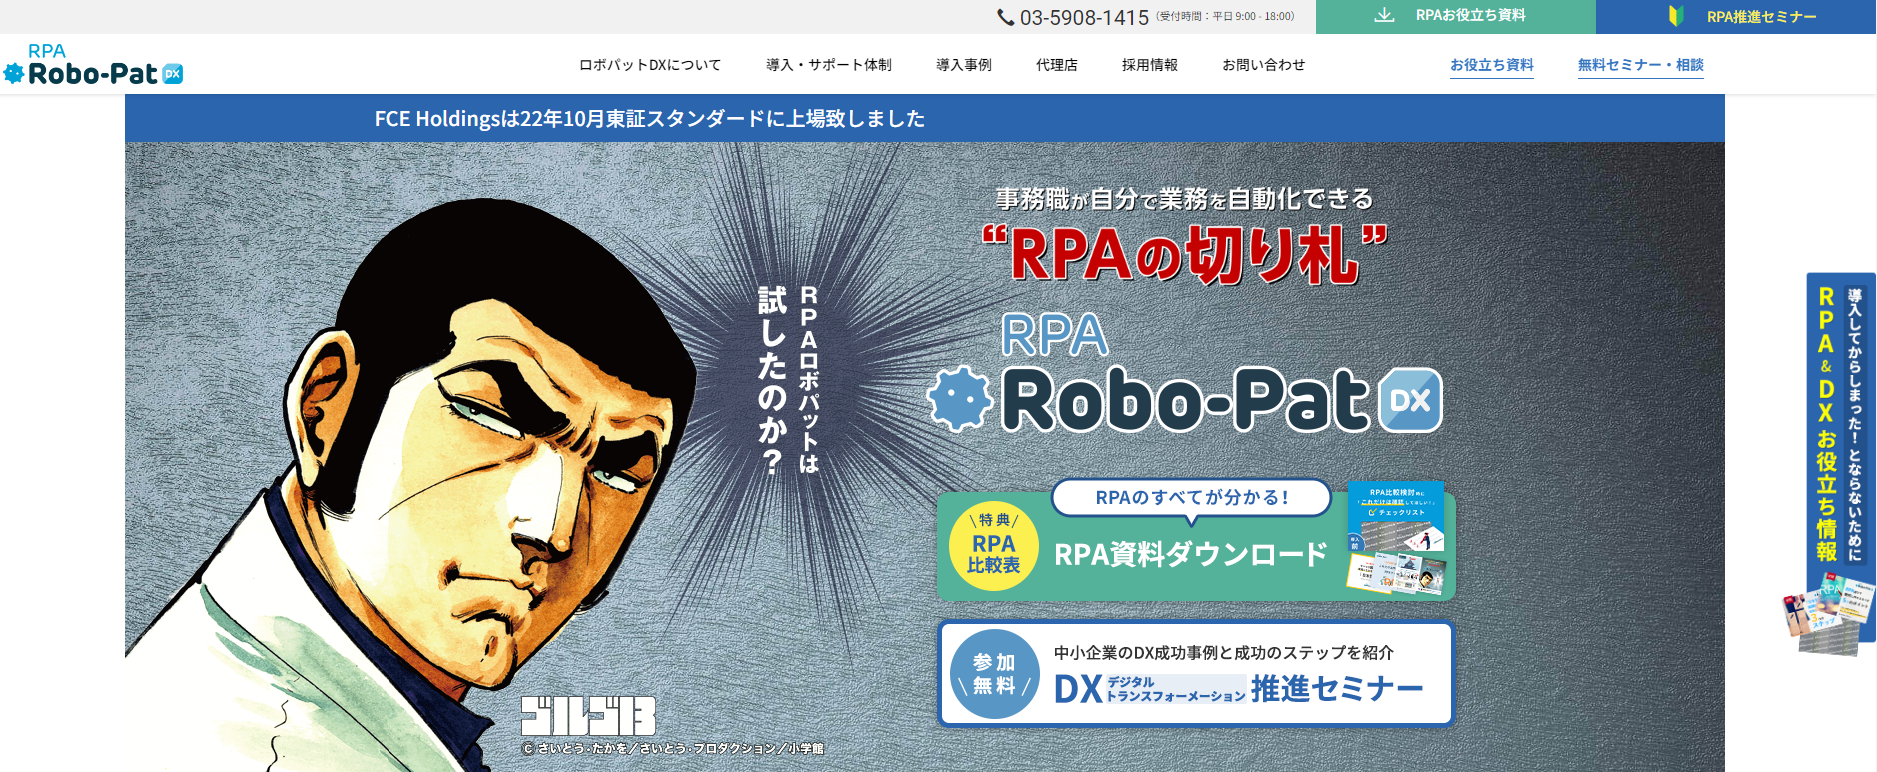 Robo-Patサービスページ画像